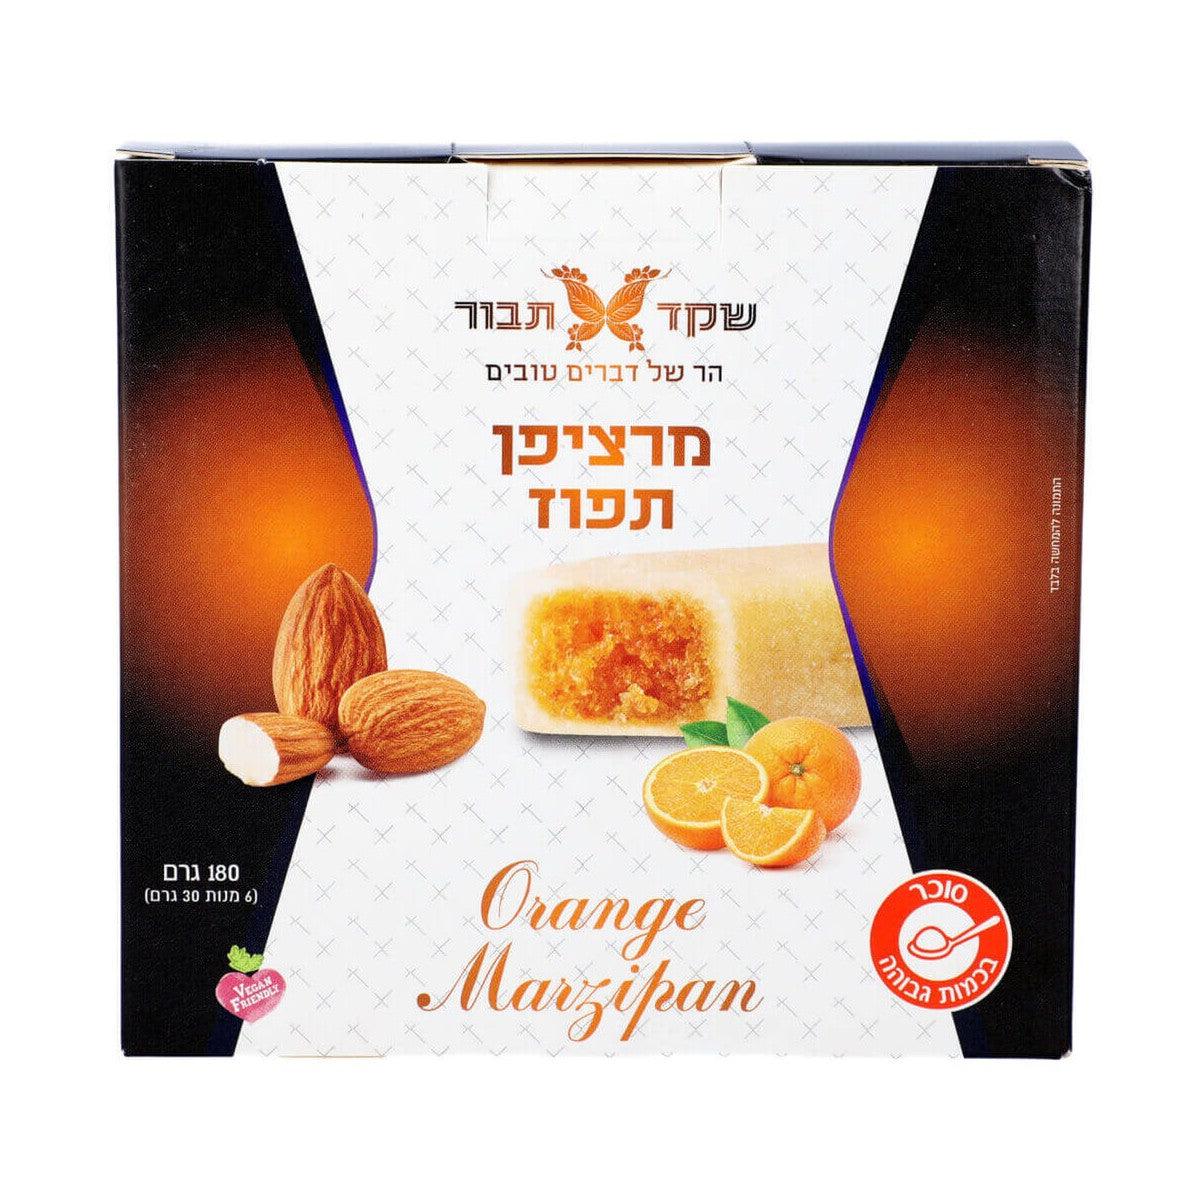 Orange marzipan - Shaked Tavor - Israel Menu